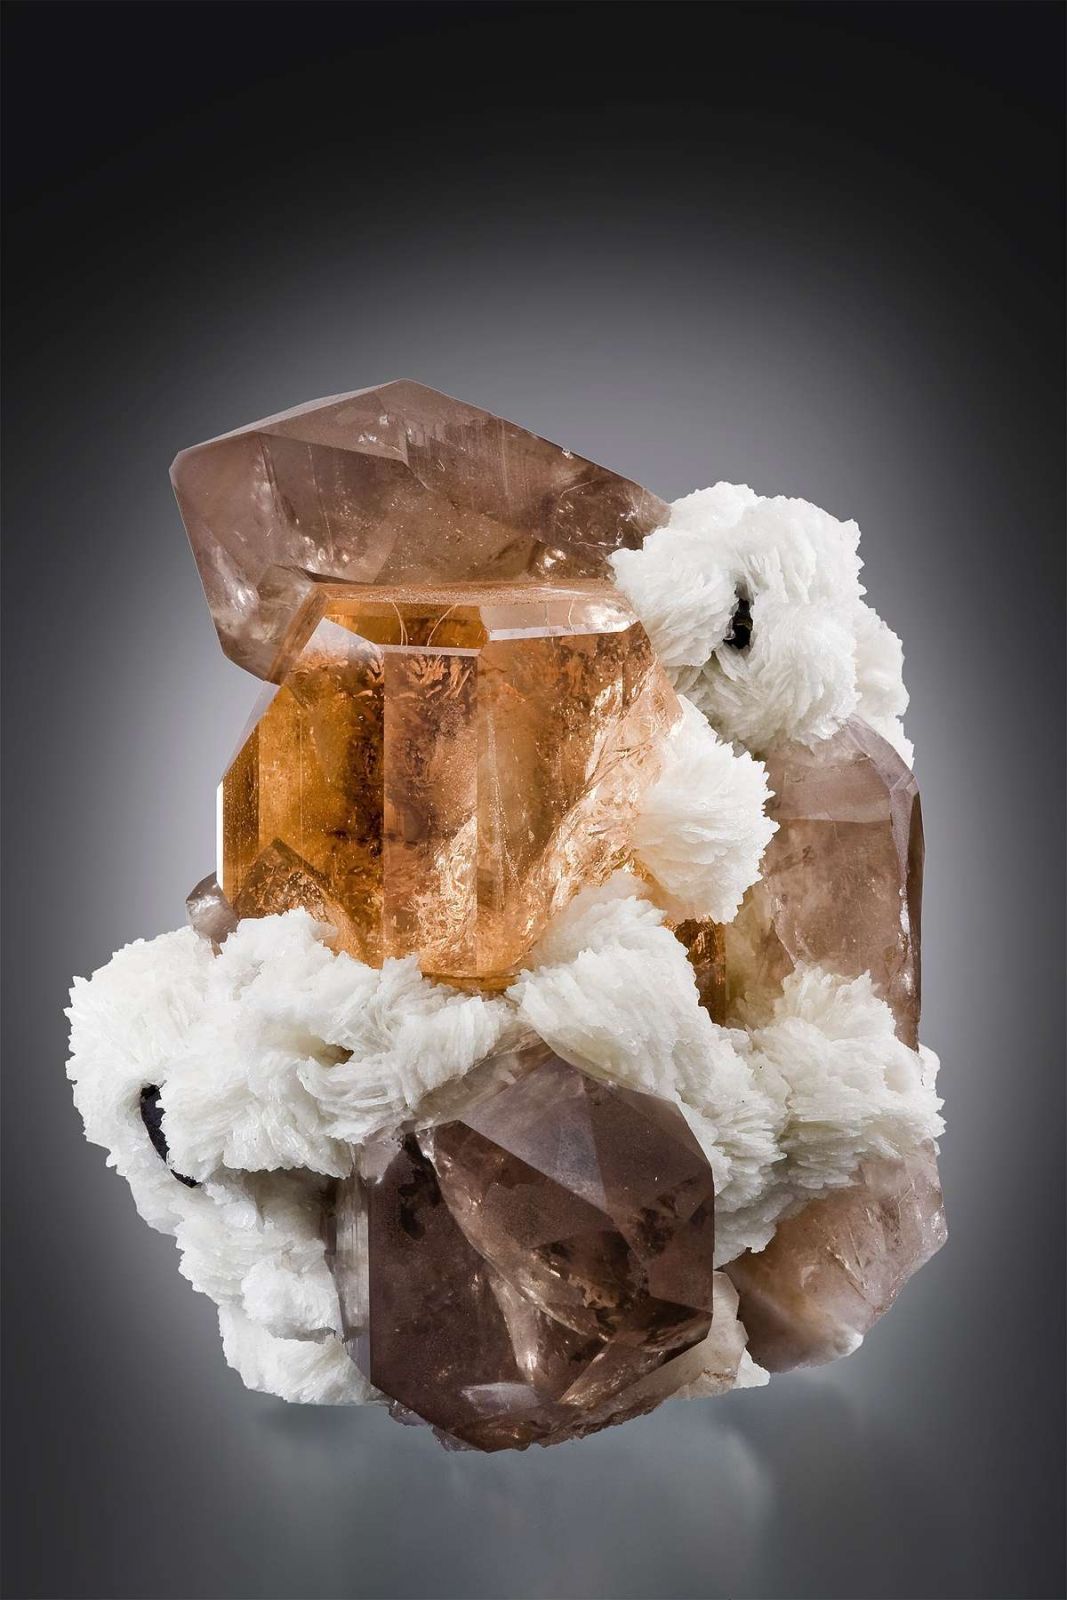 Topaz With Quartz on Albite - VLT09-058 - Dassu - Pakistan Mineral Specimen